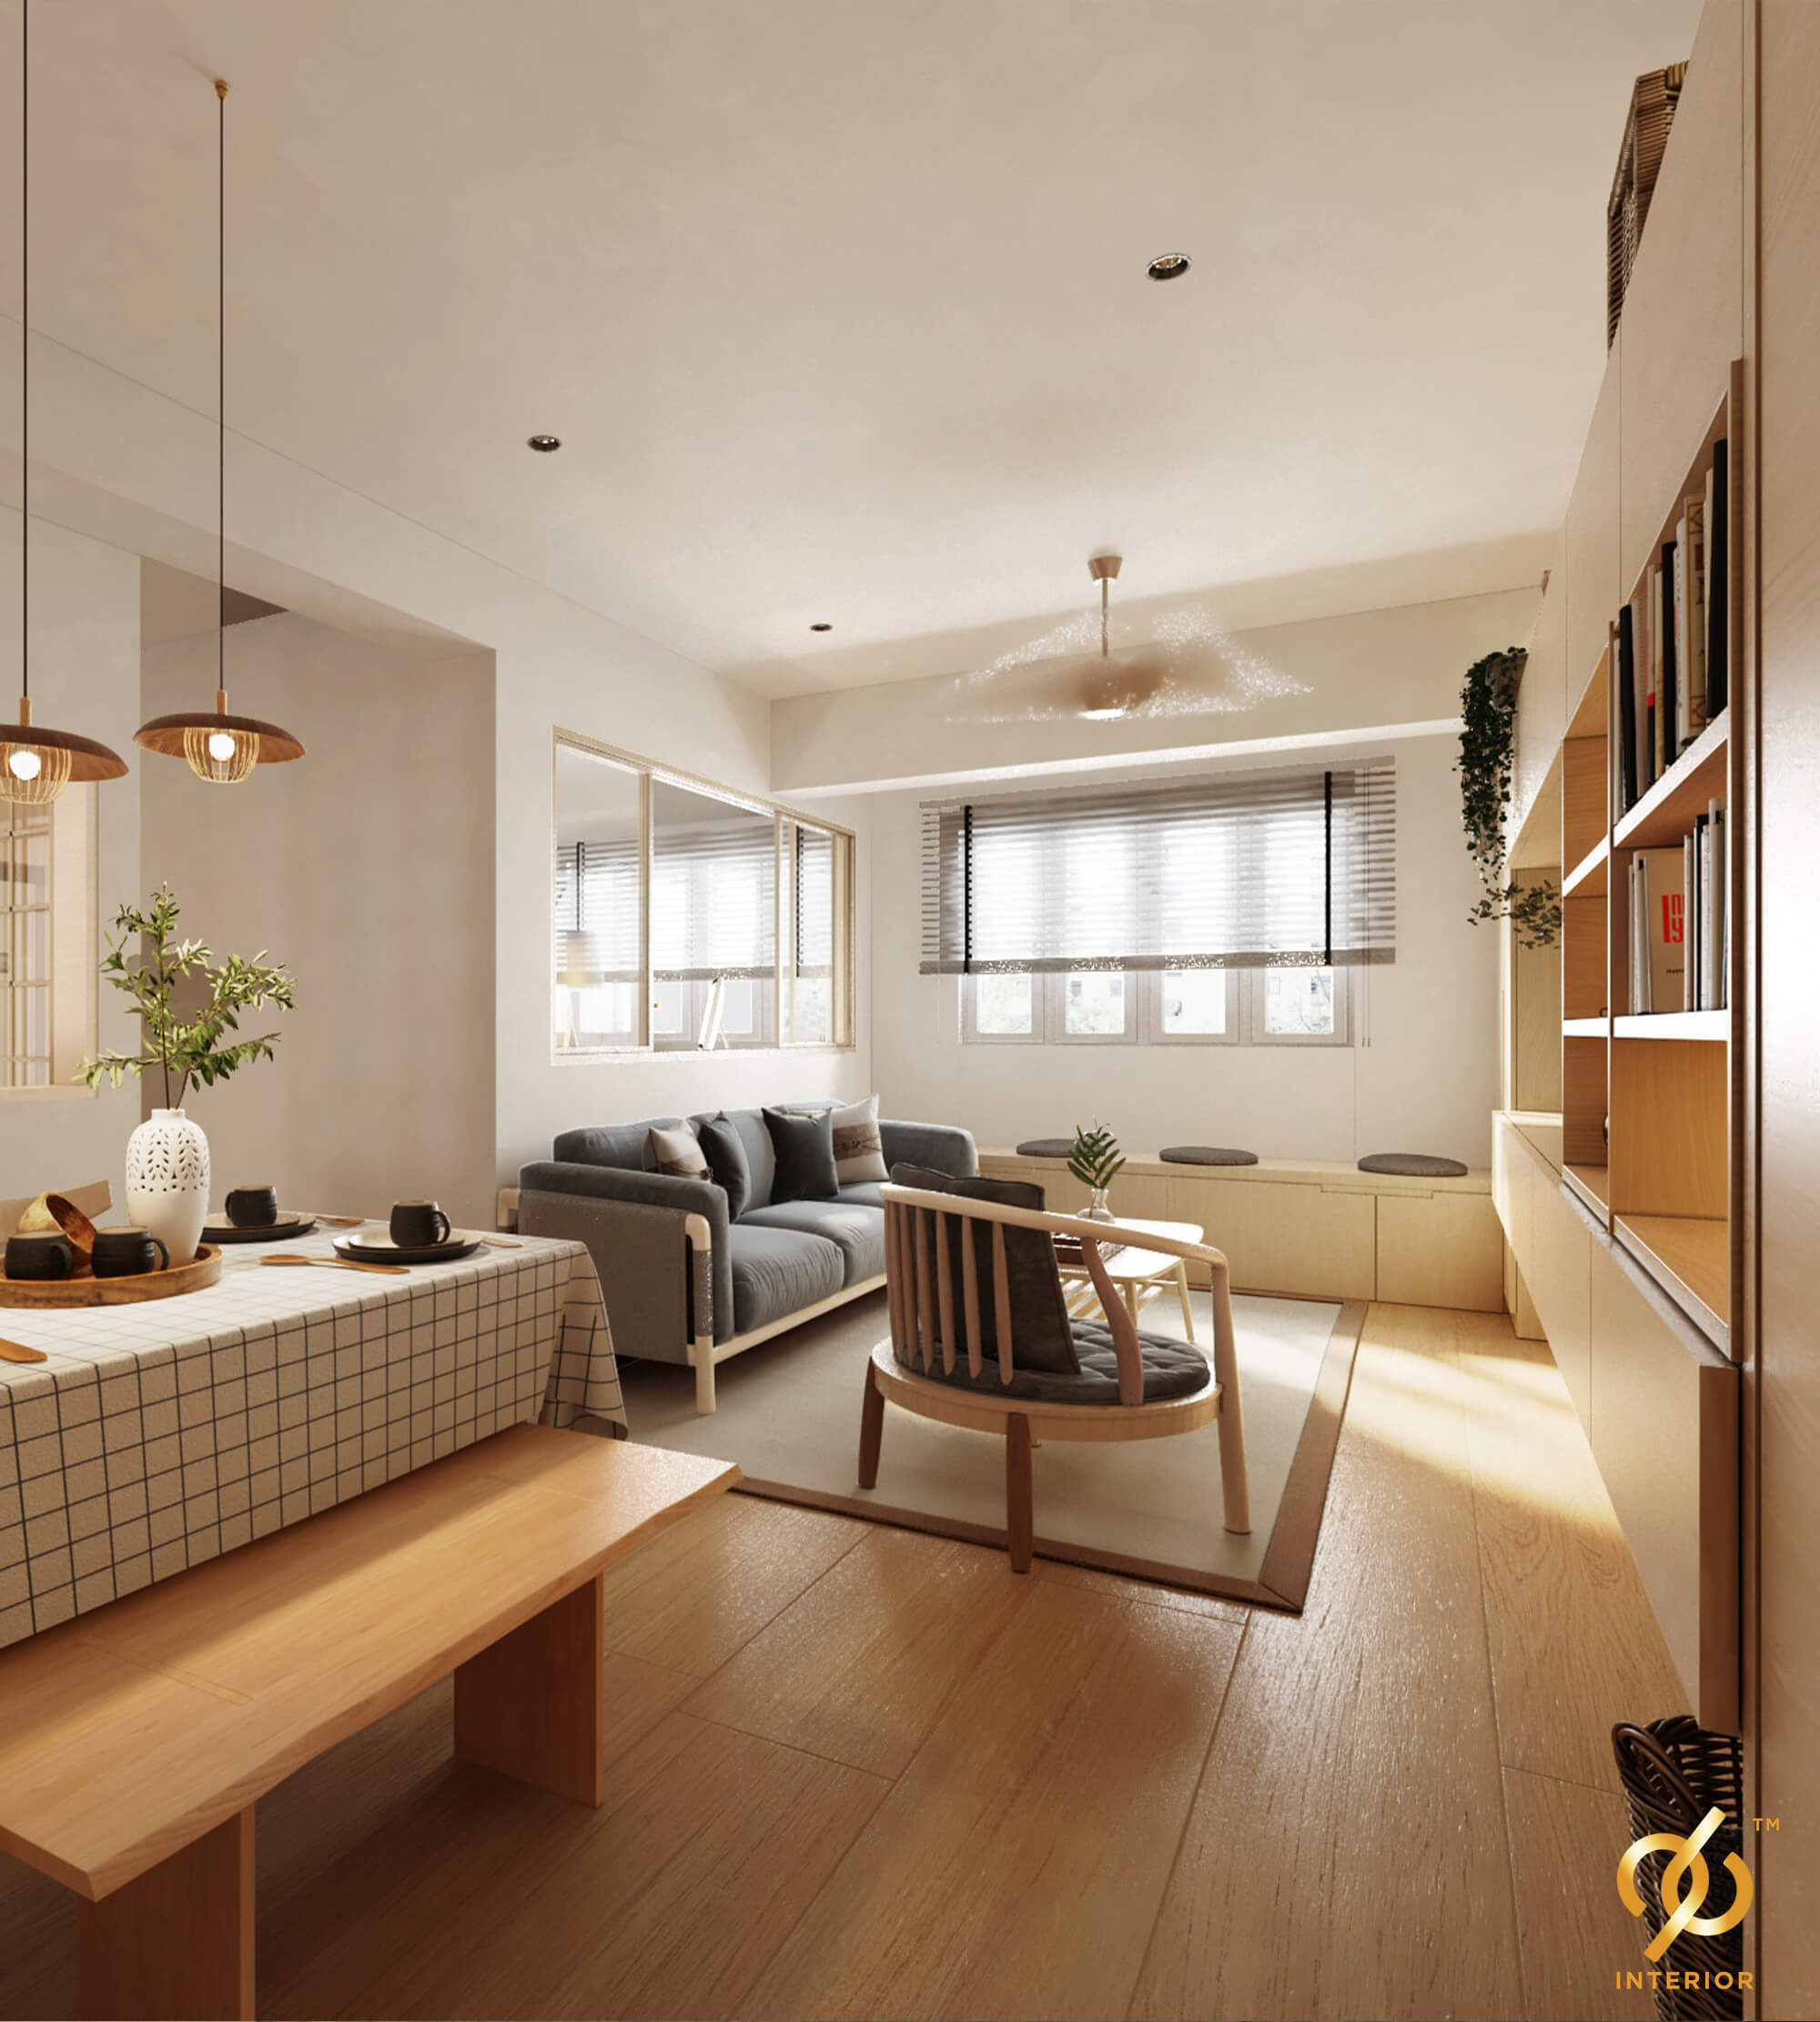 8 Japanese Interior Design Ideas For Your Home  Design Cafe